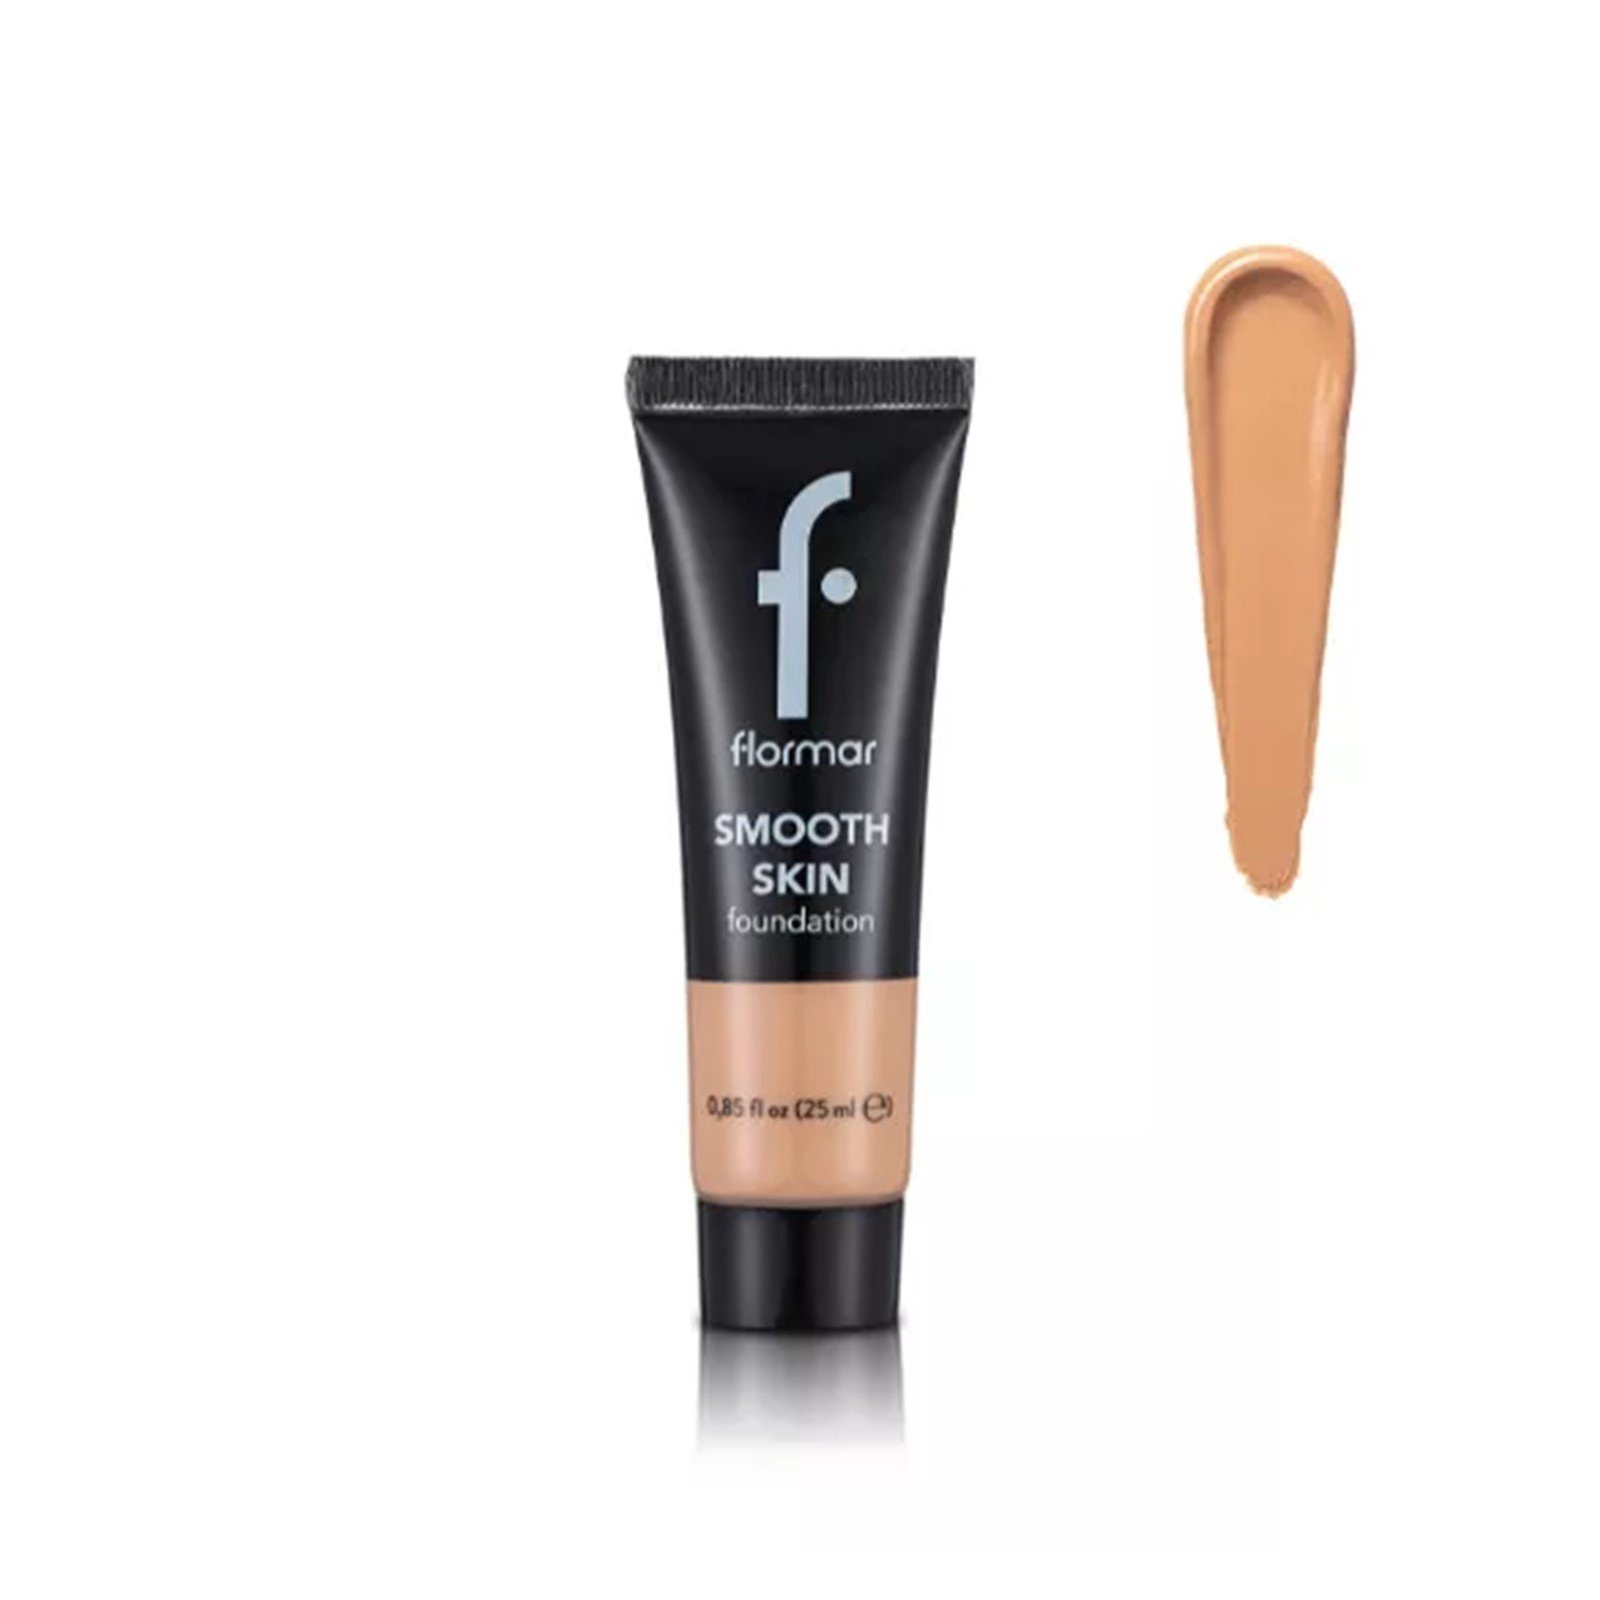 Flormar Smooth Skin Foundation